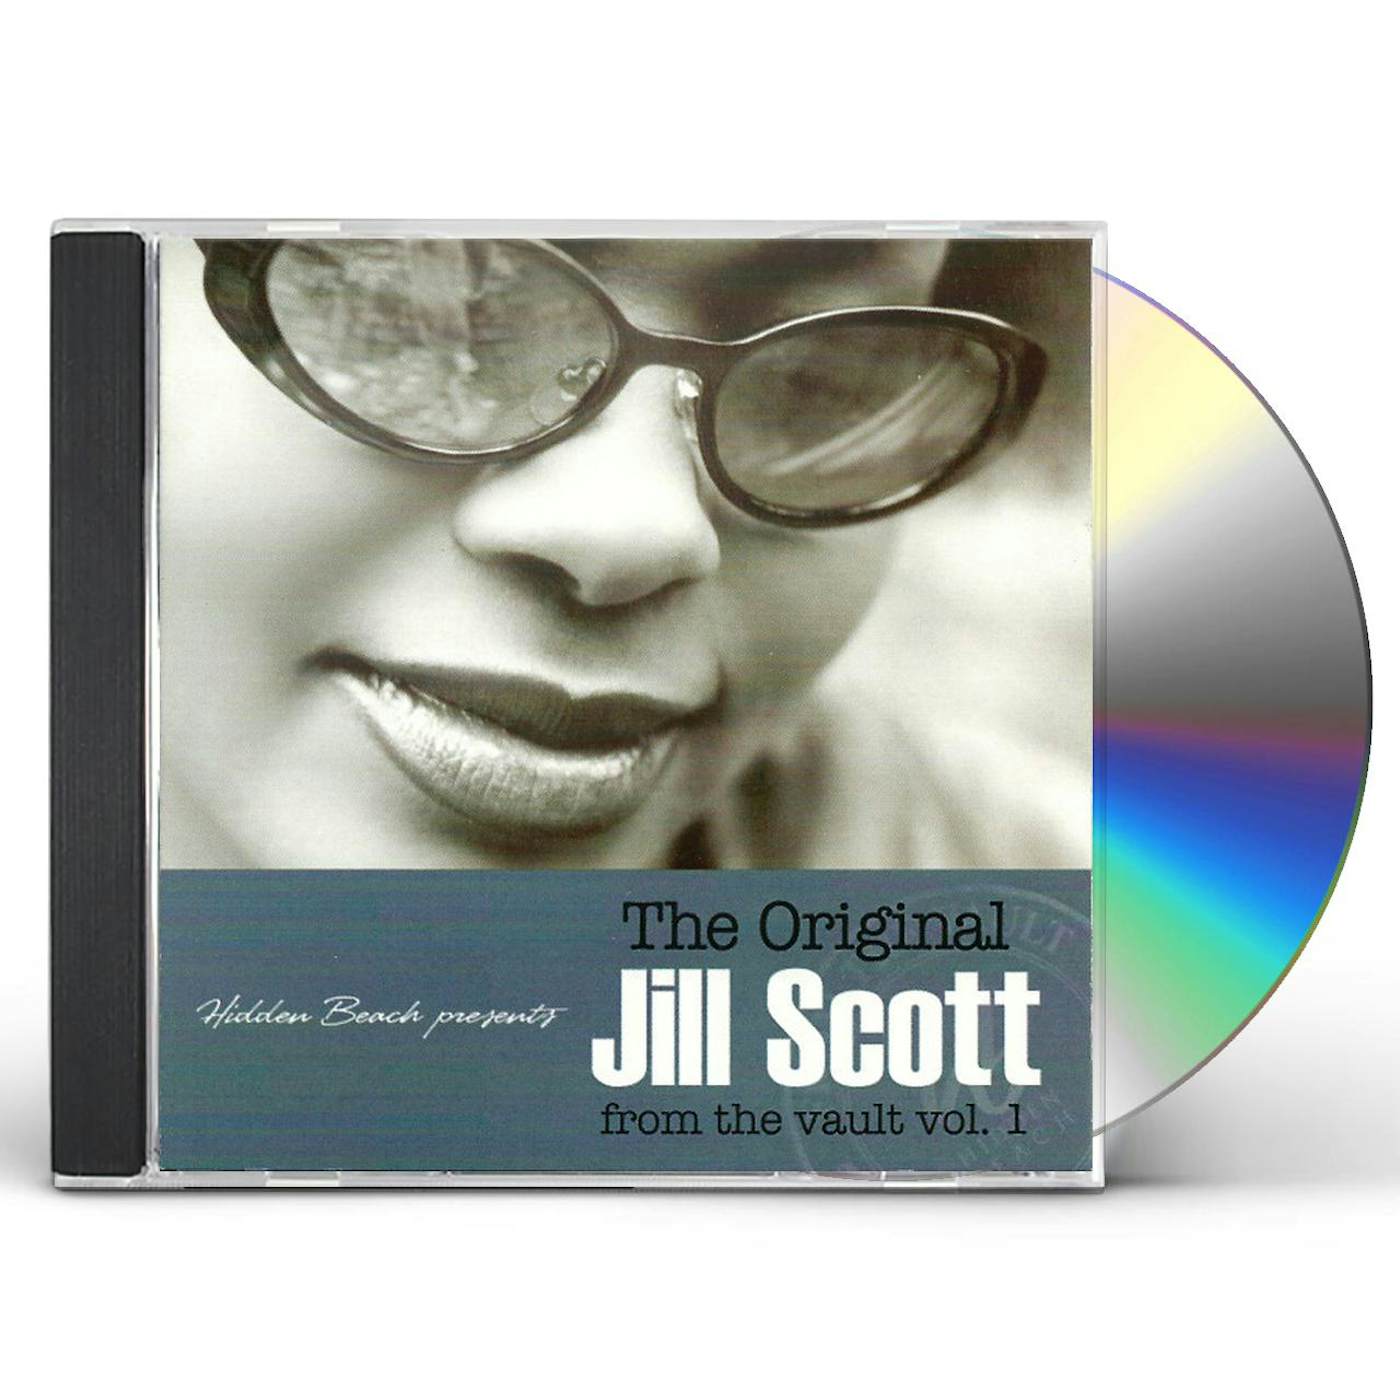 ORIGINAL JILL SCOTT CD